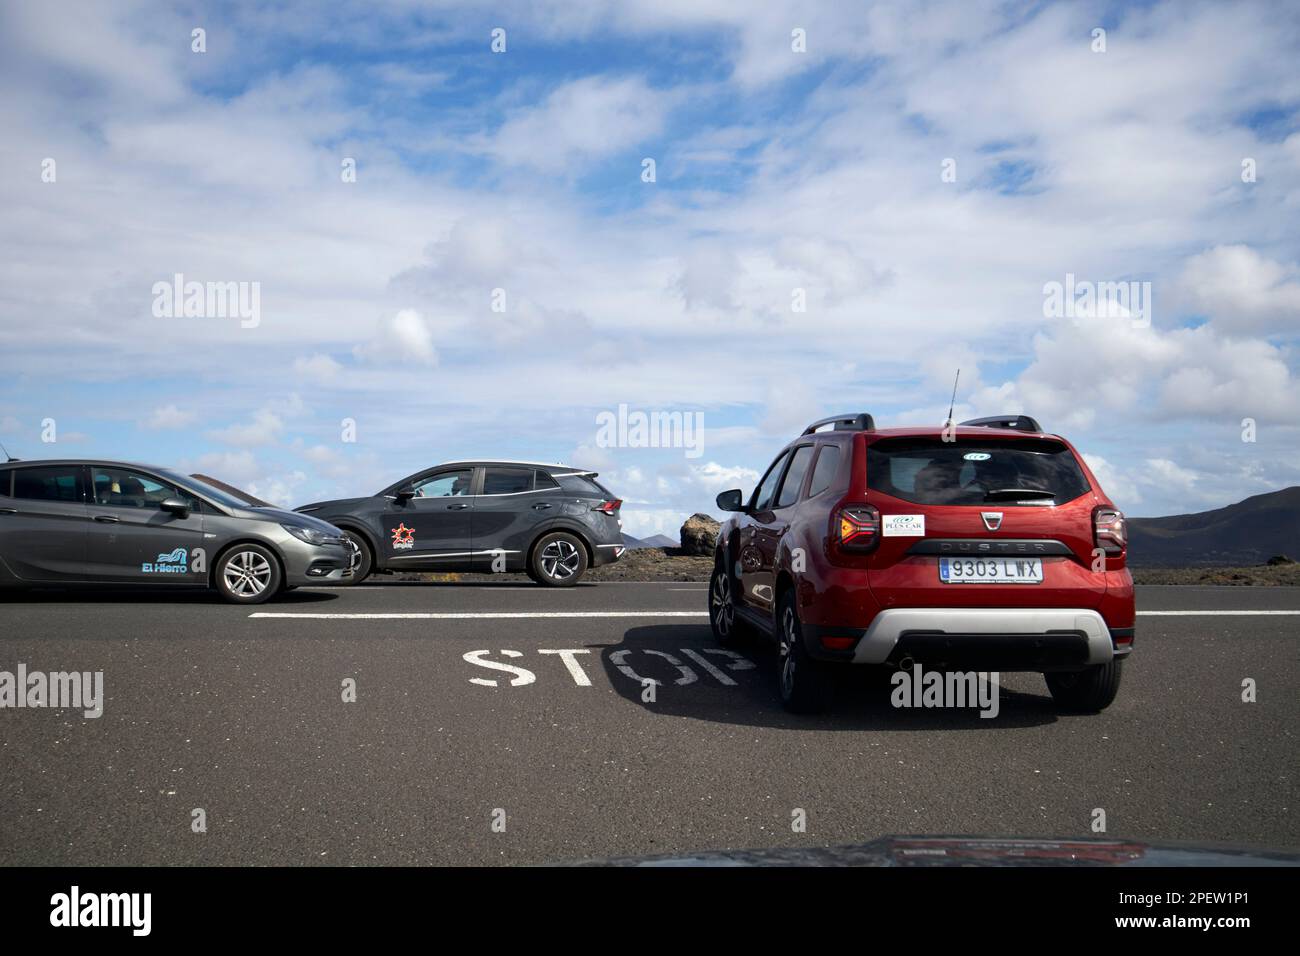 Trafficata intersezione stradale piena di auto a noleggio parque nacional de timanfaya Lanzarote, Isole Canarie, Spagna Foto Stock